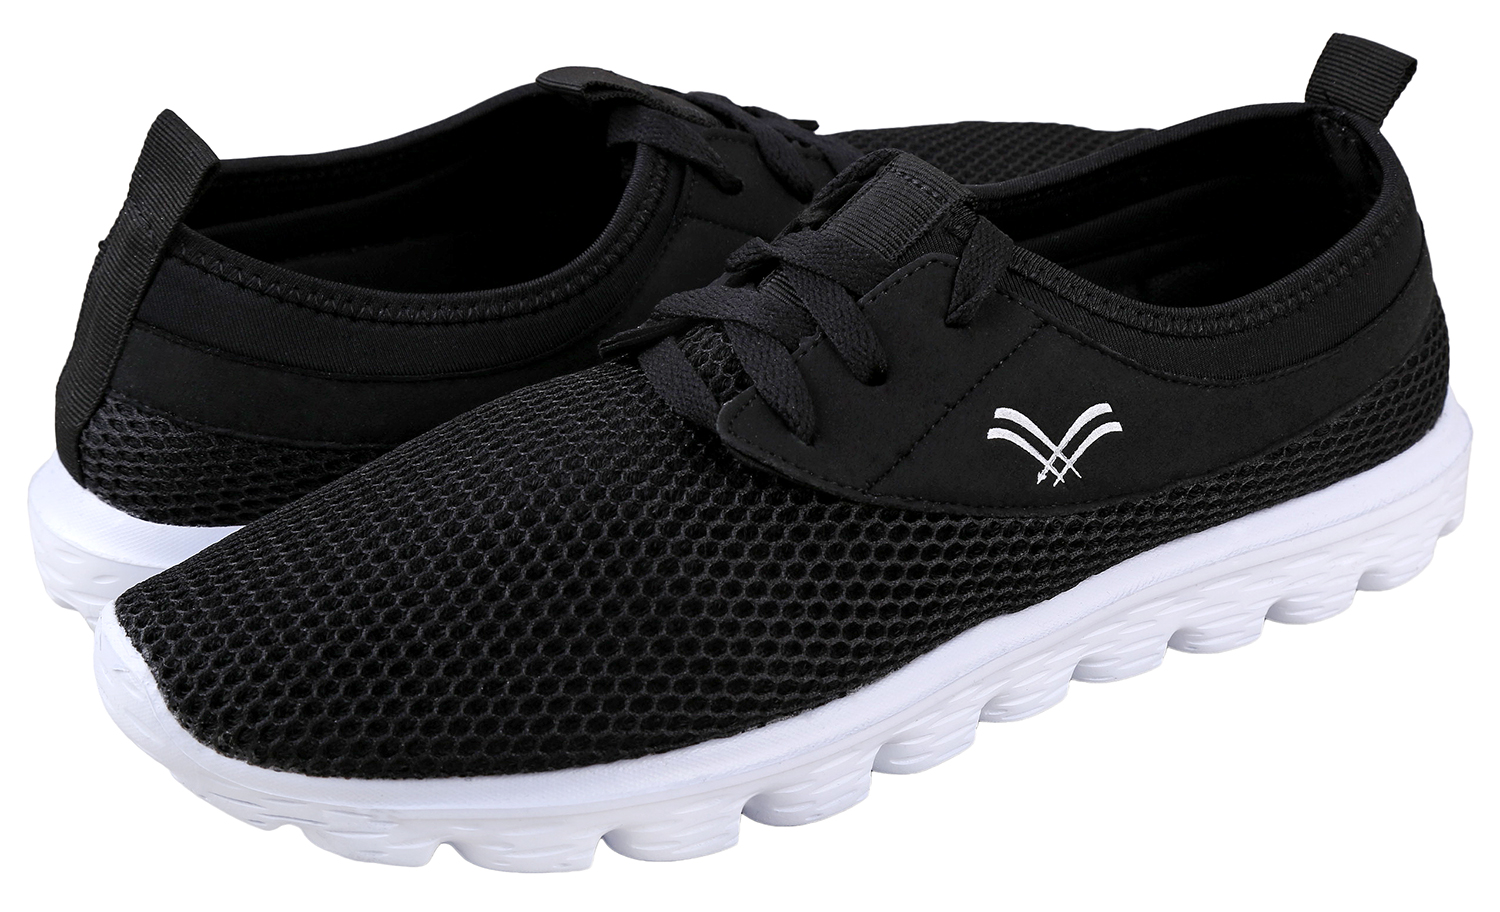 Urban Fox Men's Breeze Lightweight Shoes | Lightweight Shoes for Men | Casual Shoes | Walking Shoes for Men | Black/White 11 M US - image 5 of 7